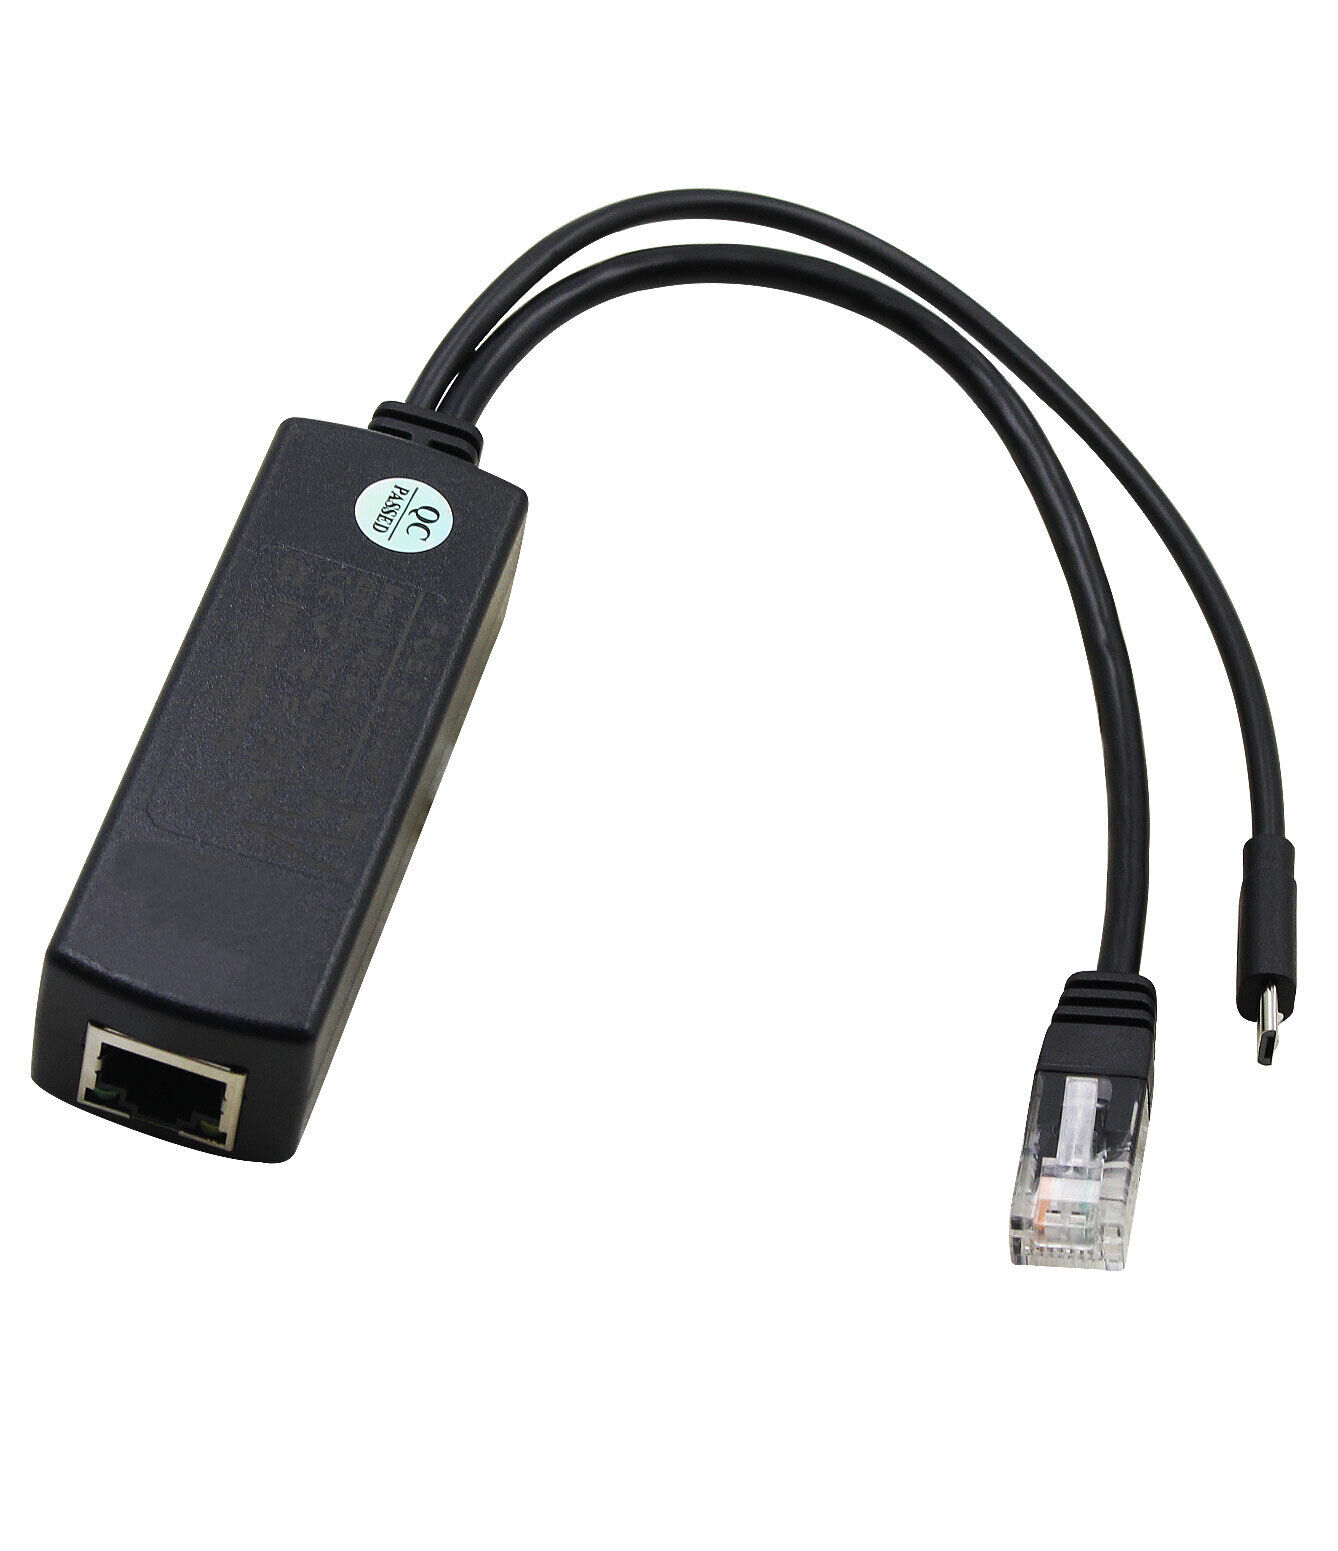 1x Popular PoE Splitter Power Over Ethernet 48V to 5V 2.4A Micro USB Adapter 12W